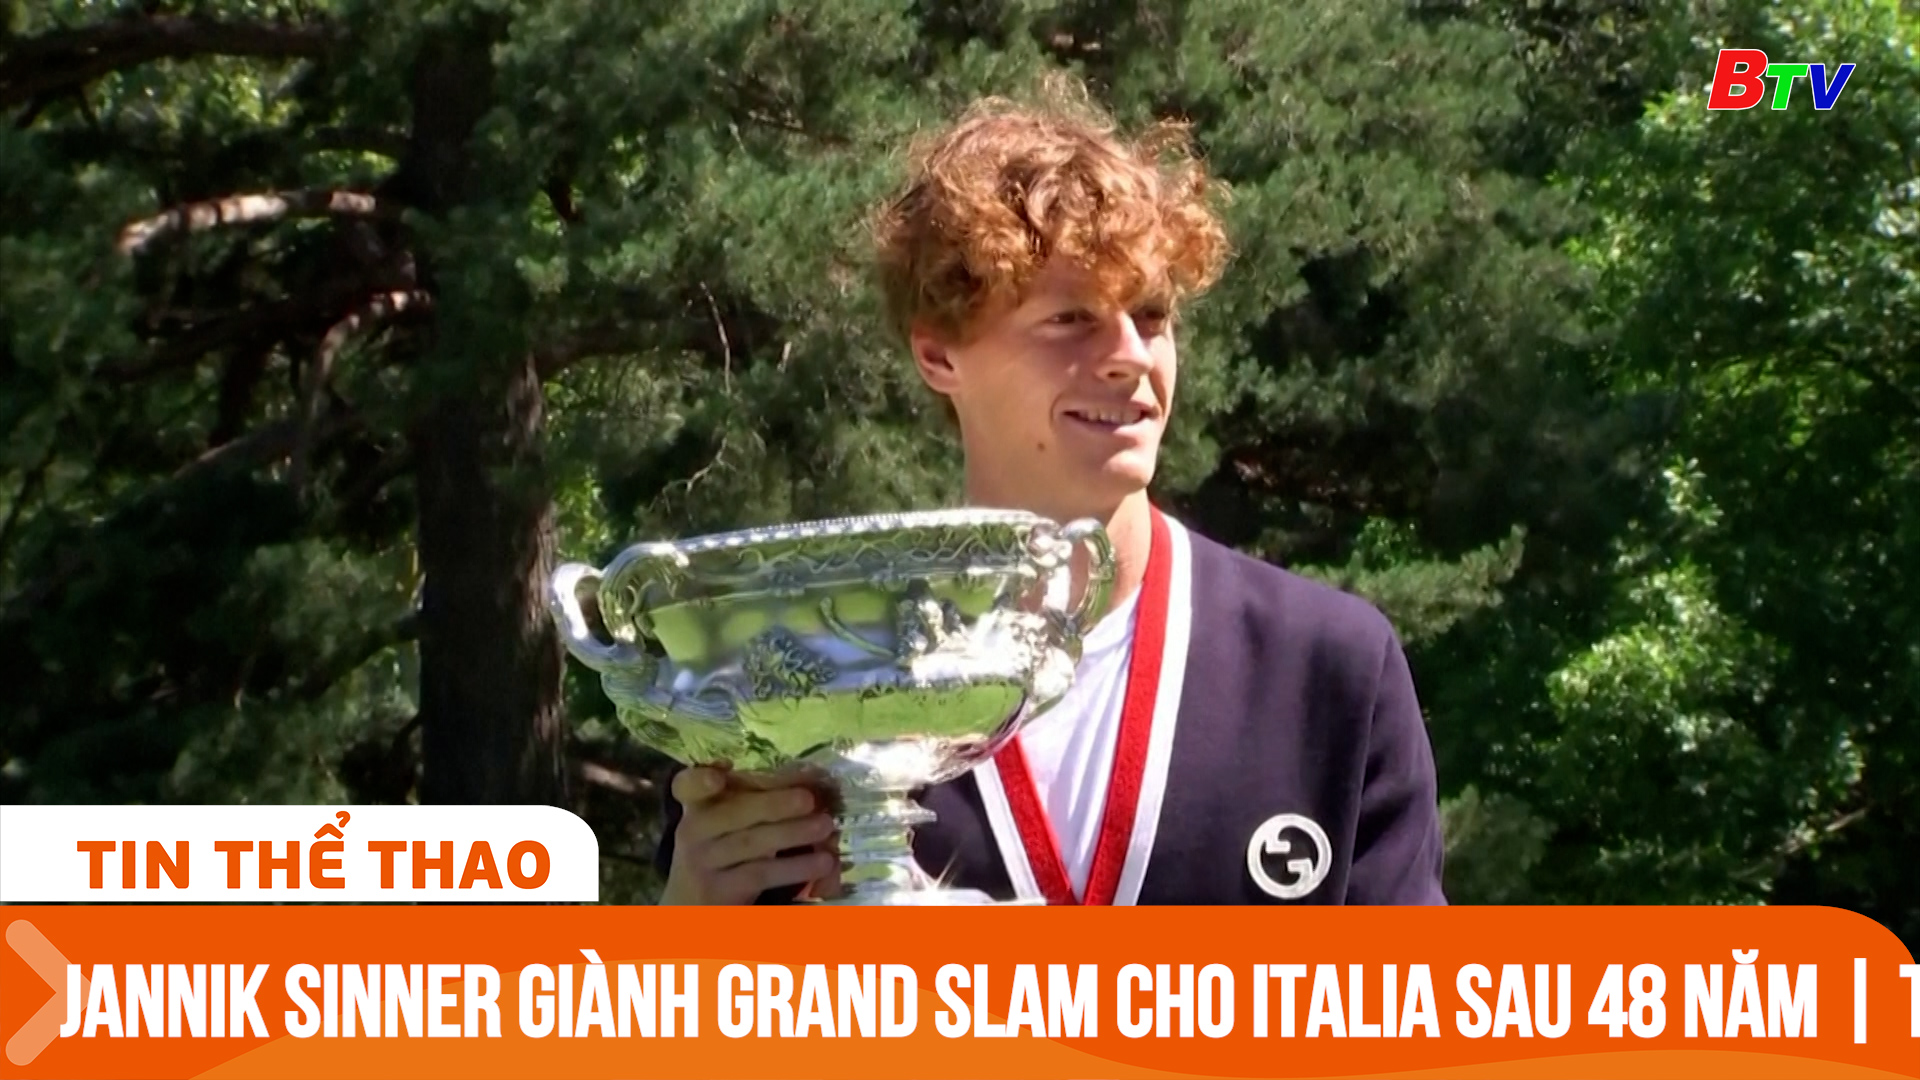 Jannik Sinner giành Grand Slam cho Italia sau 48 năm | Tin Thể thao 24h	